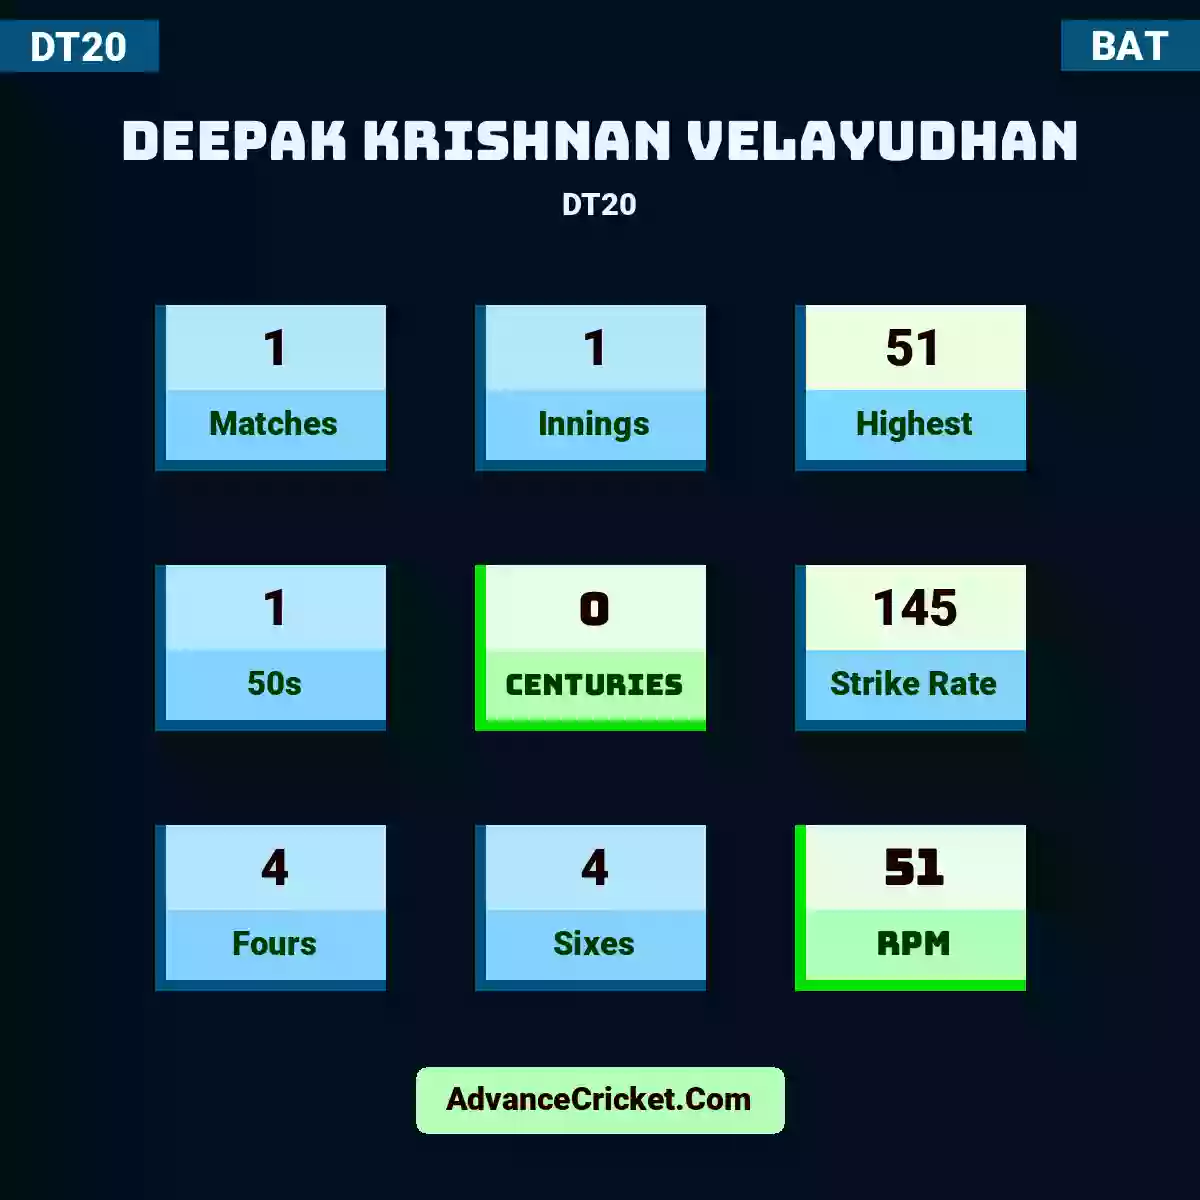 Deepak Krishnan Velayudhan DT20 , Deepak Krishnan Velayudhan played 1 matches, scored 51 runs as highest, 1 half-centuries, and 0 centuries, with a strike rate of 145. D.Krishnan.Velayudhan hit 4 fours and 4 sixes, with an RPM of 51.